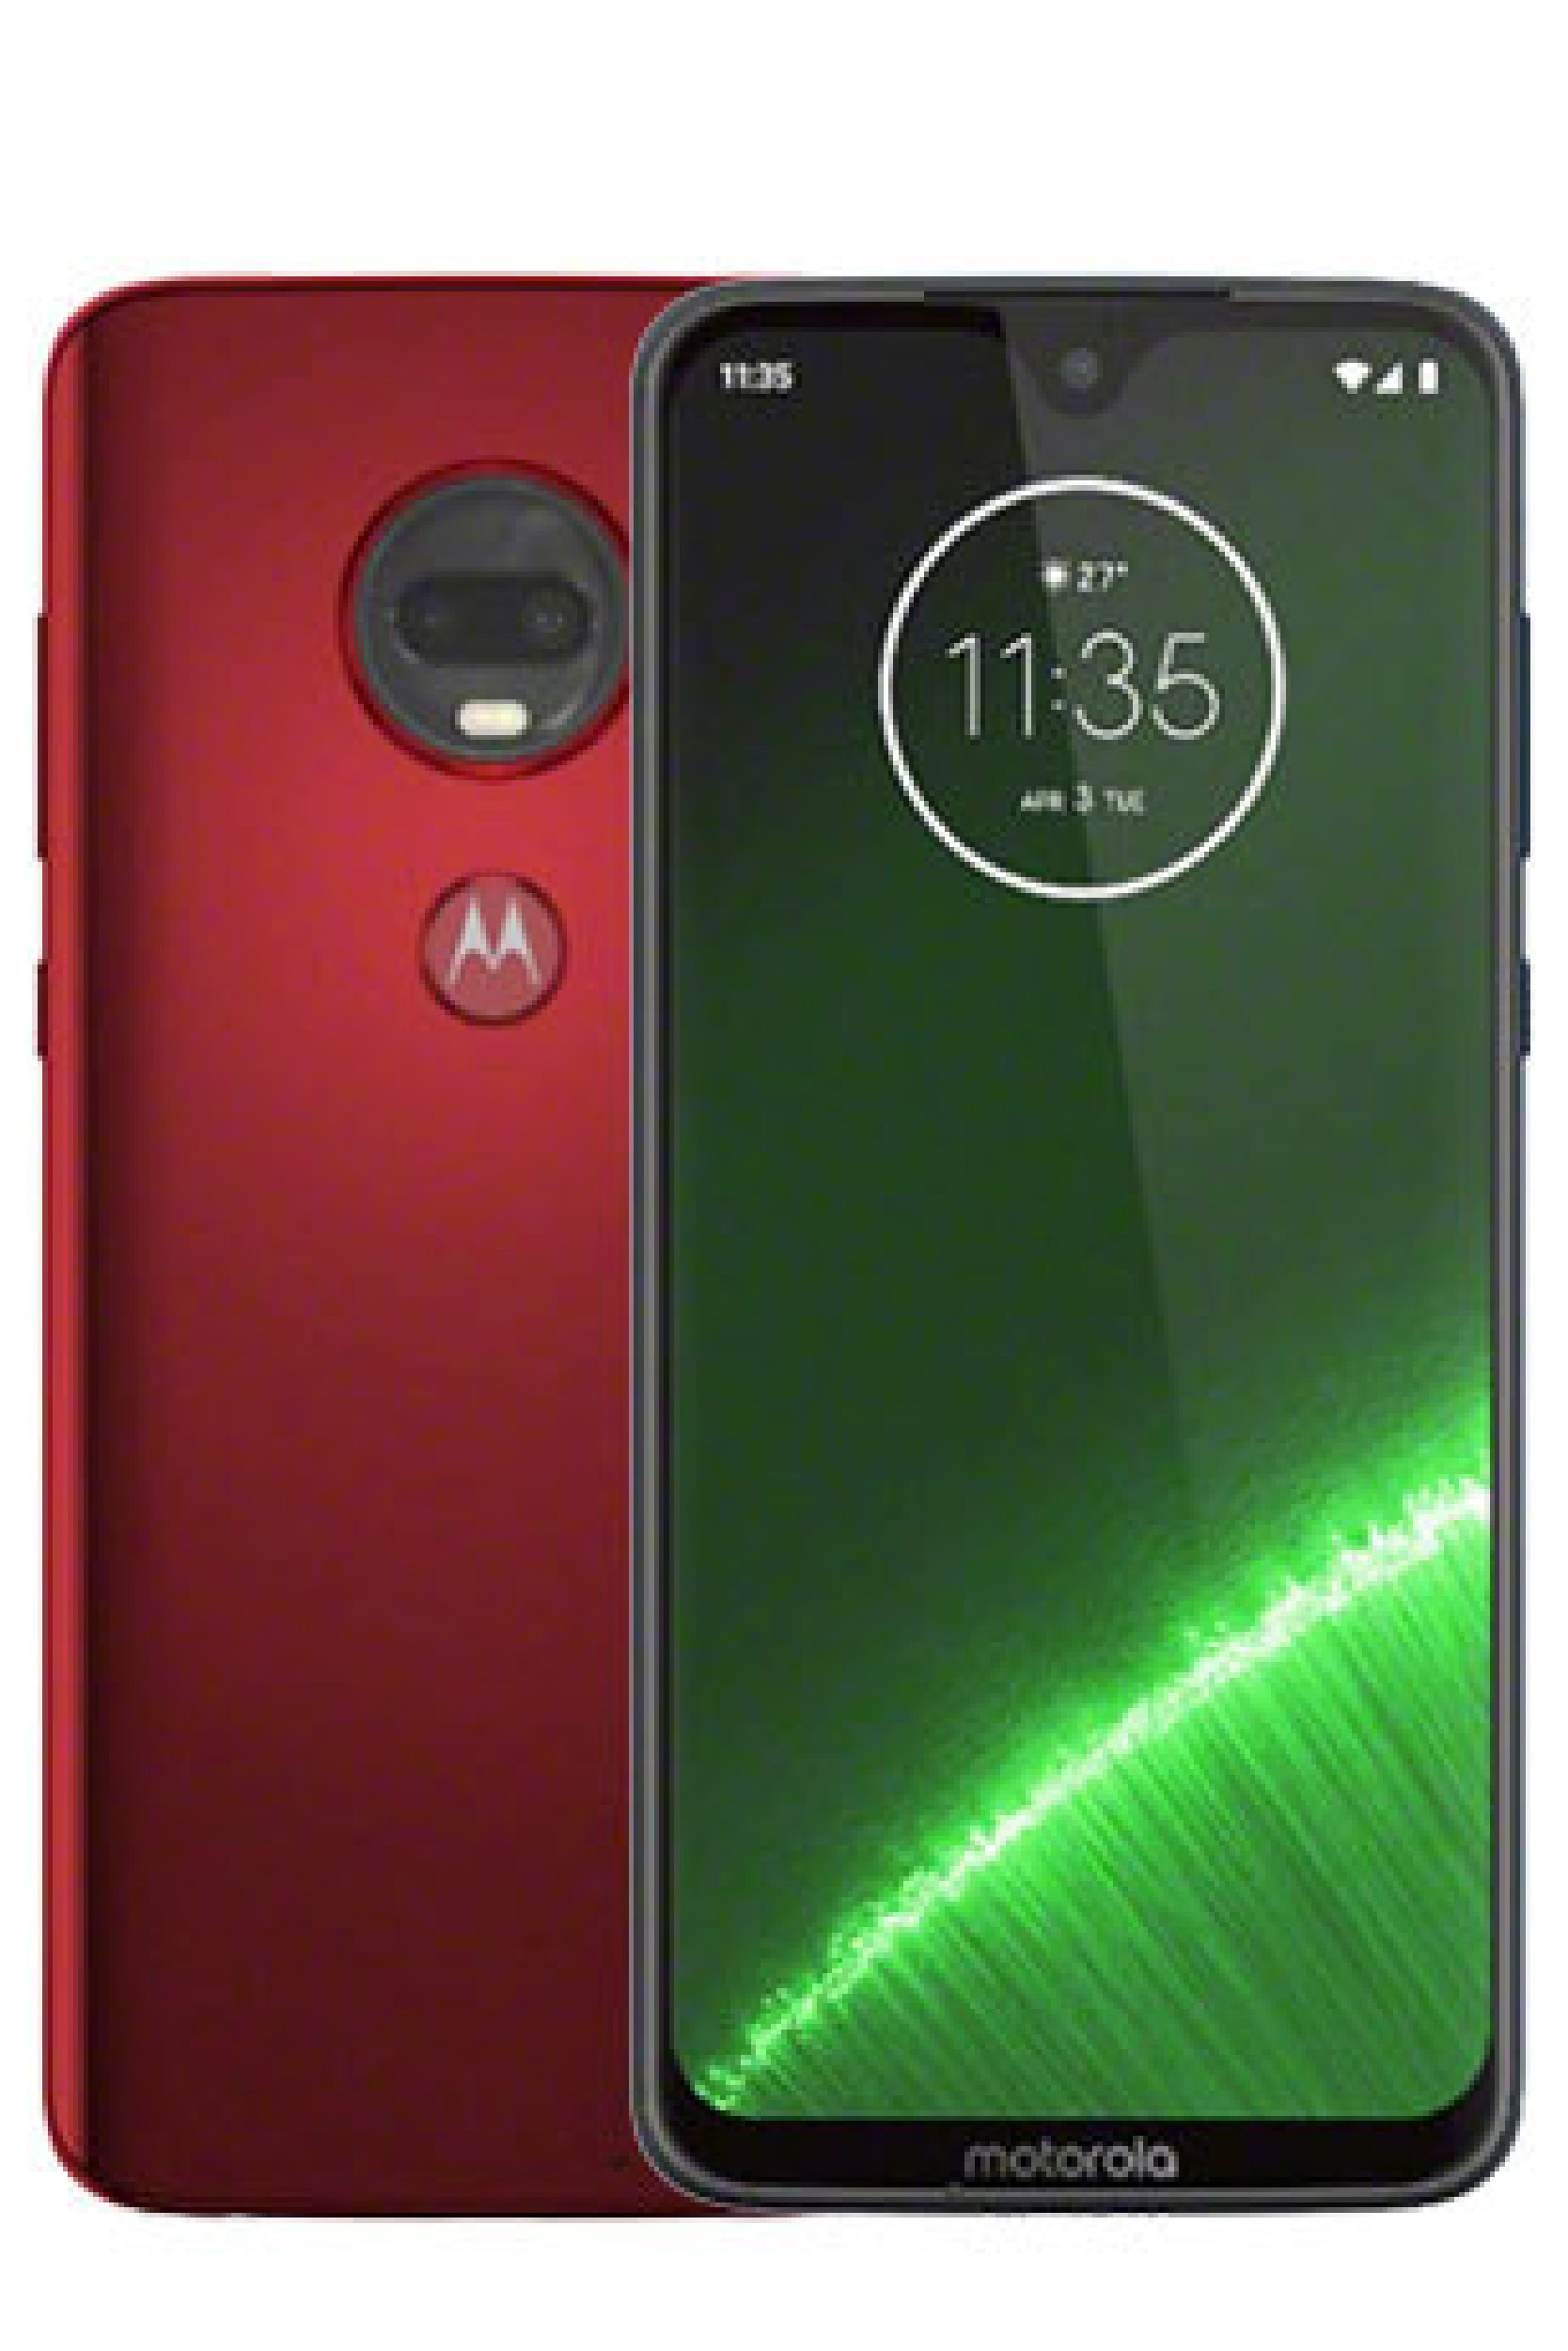 Motorola Moto G7 Plus Price in Pakistan & Specs | ProPakistani